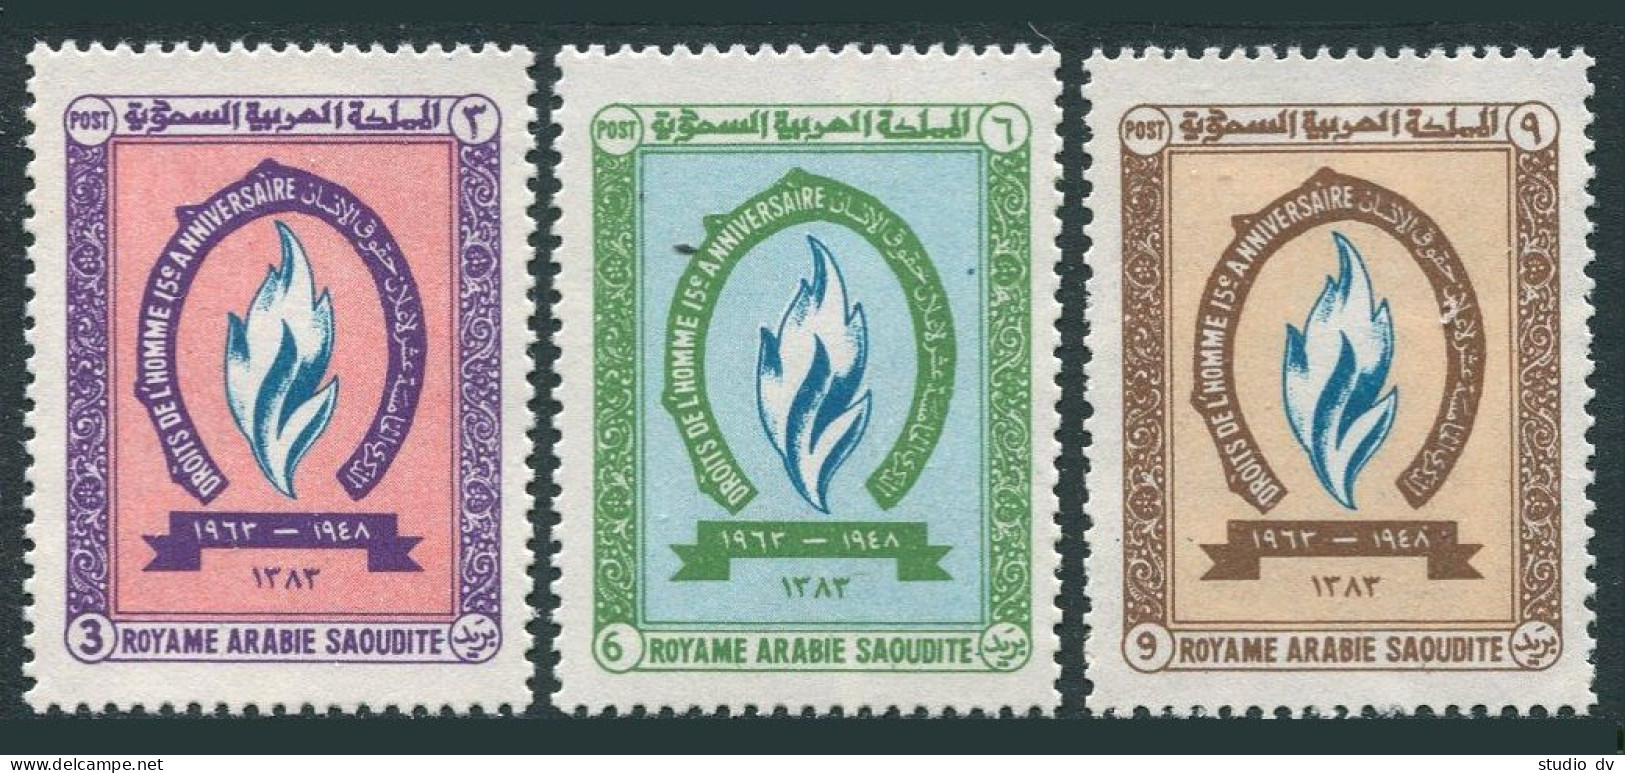 Saudi Arabia 282-284, MNH. Mi 166-168. Declaration Of Human Rights, 1964. - Arabie Saoudite